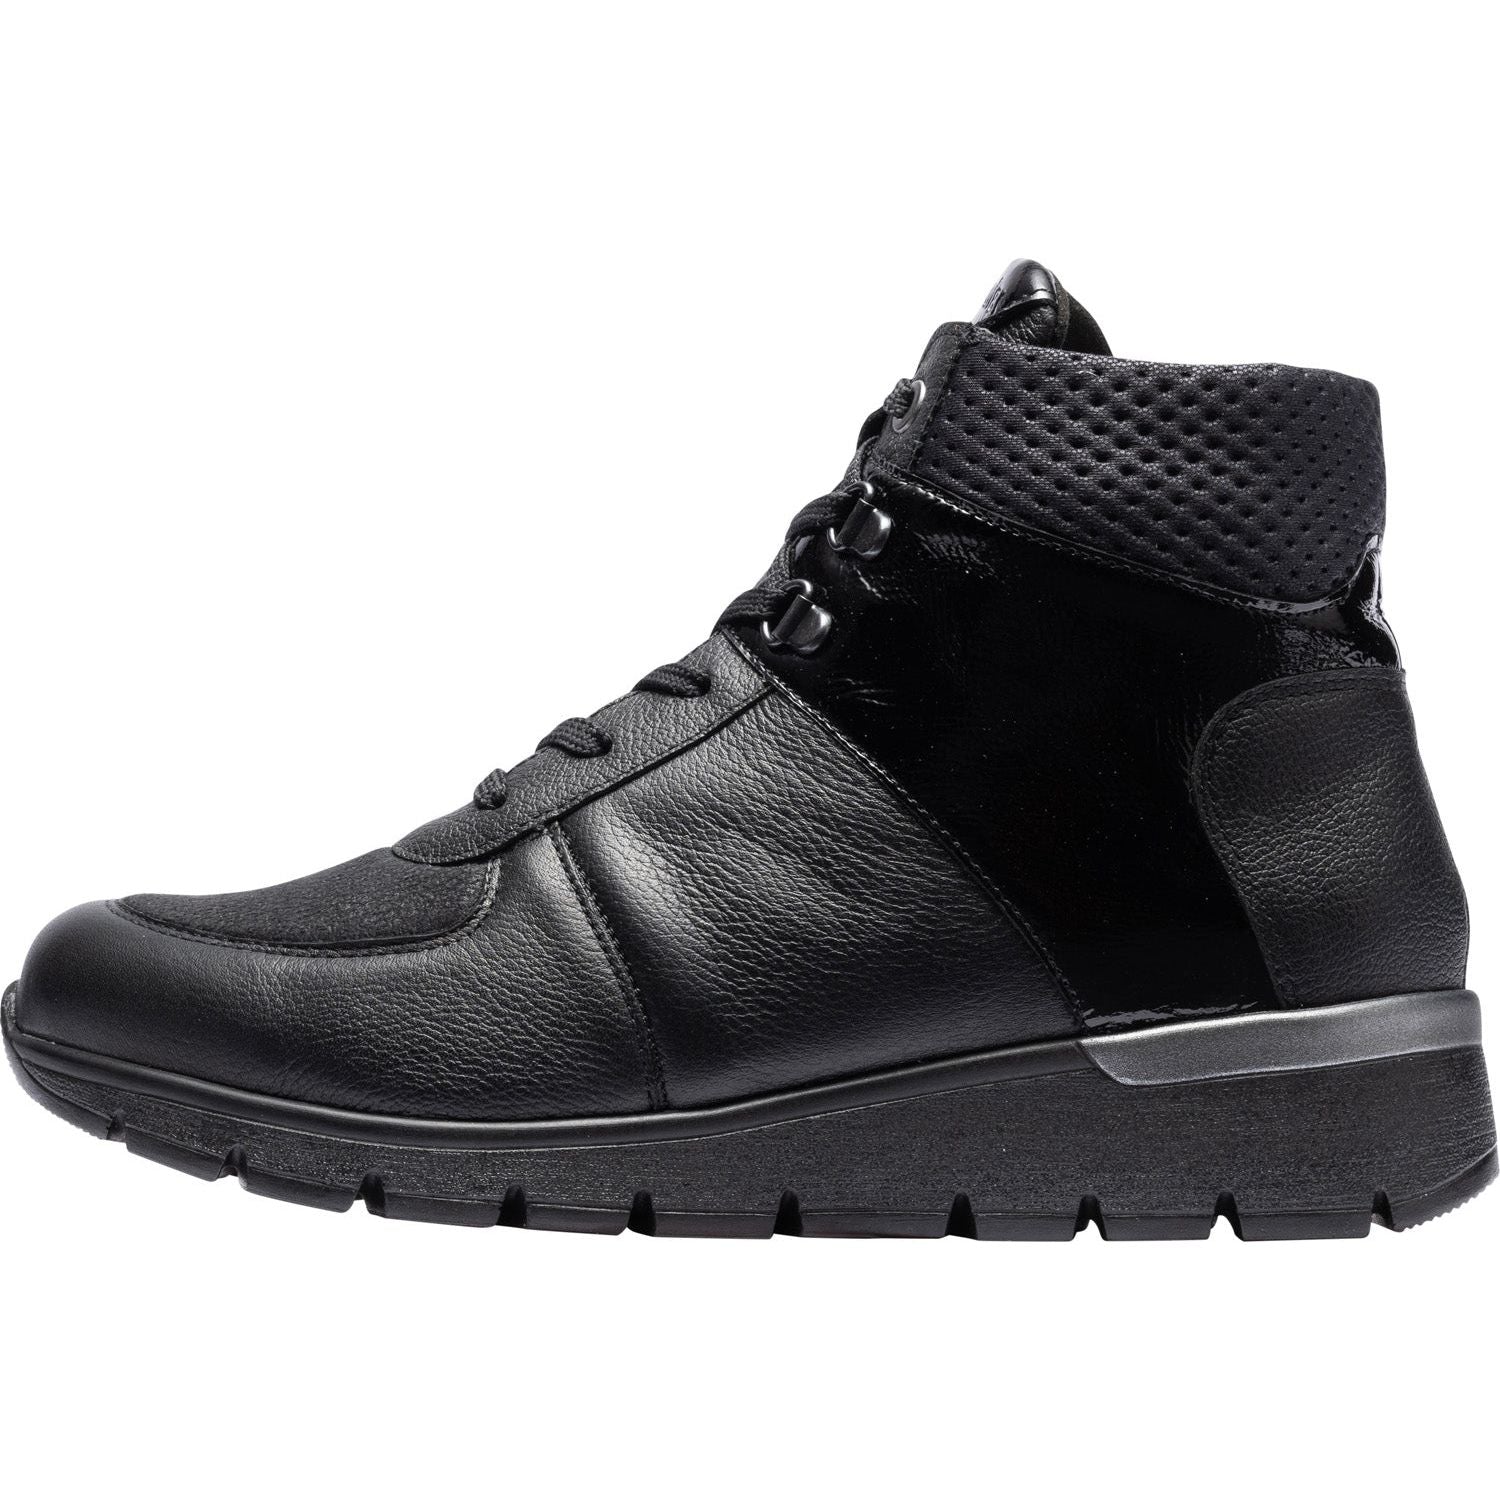 Waldlaufer K-Ramona (626K82)- Ladies Wide Fit Ankle Boot in Black | Waldlaufer  | Wide Fit Shoes | Wisemans | Bantry | West Cork | Ireland